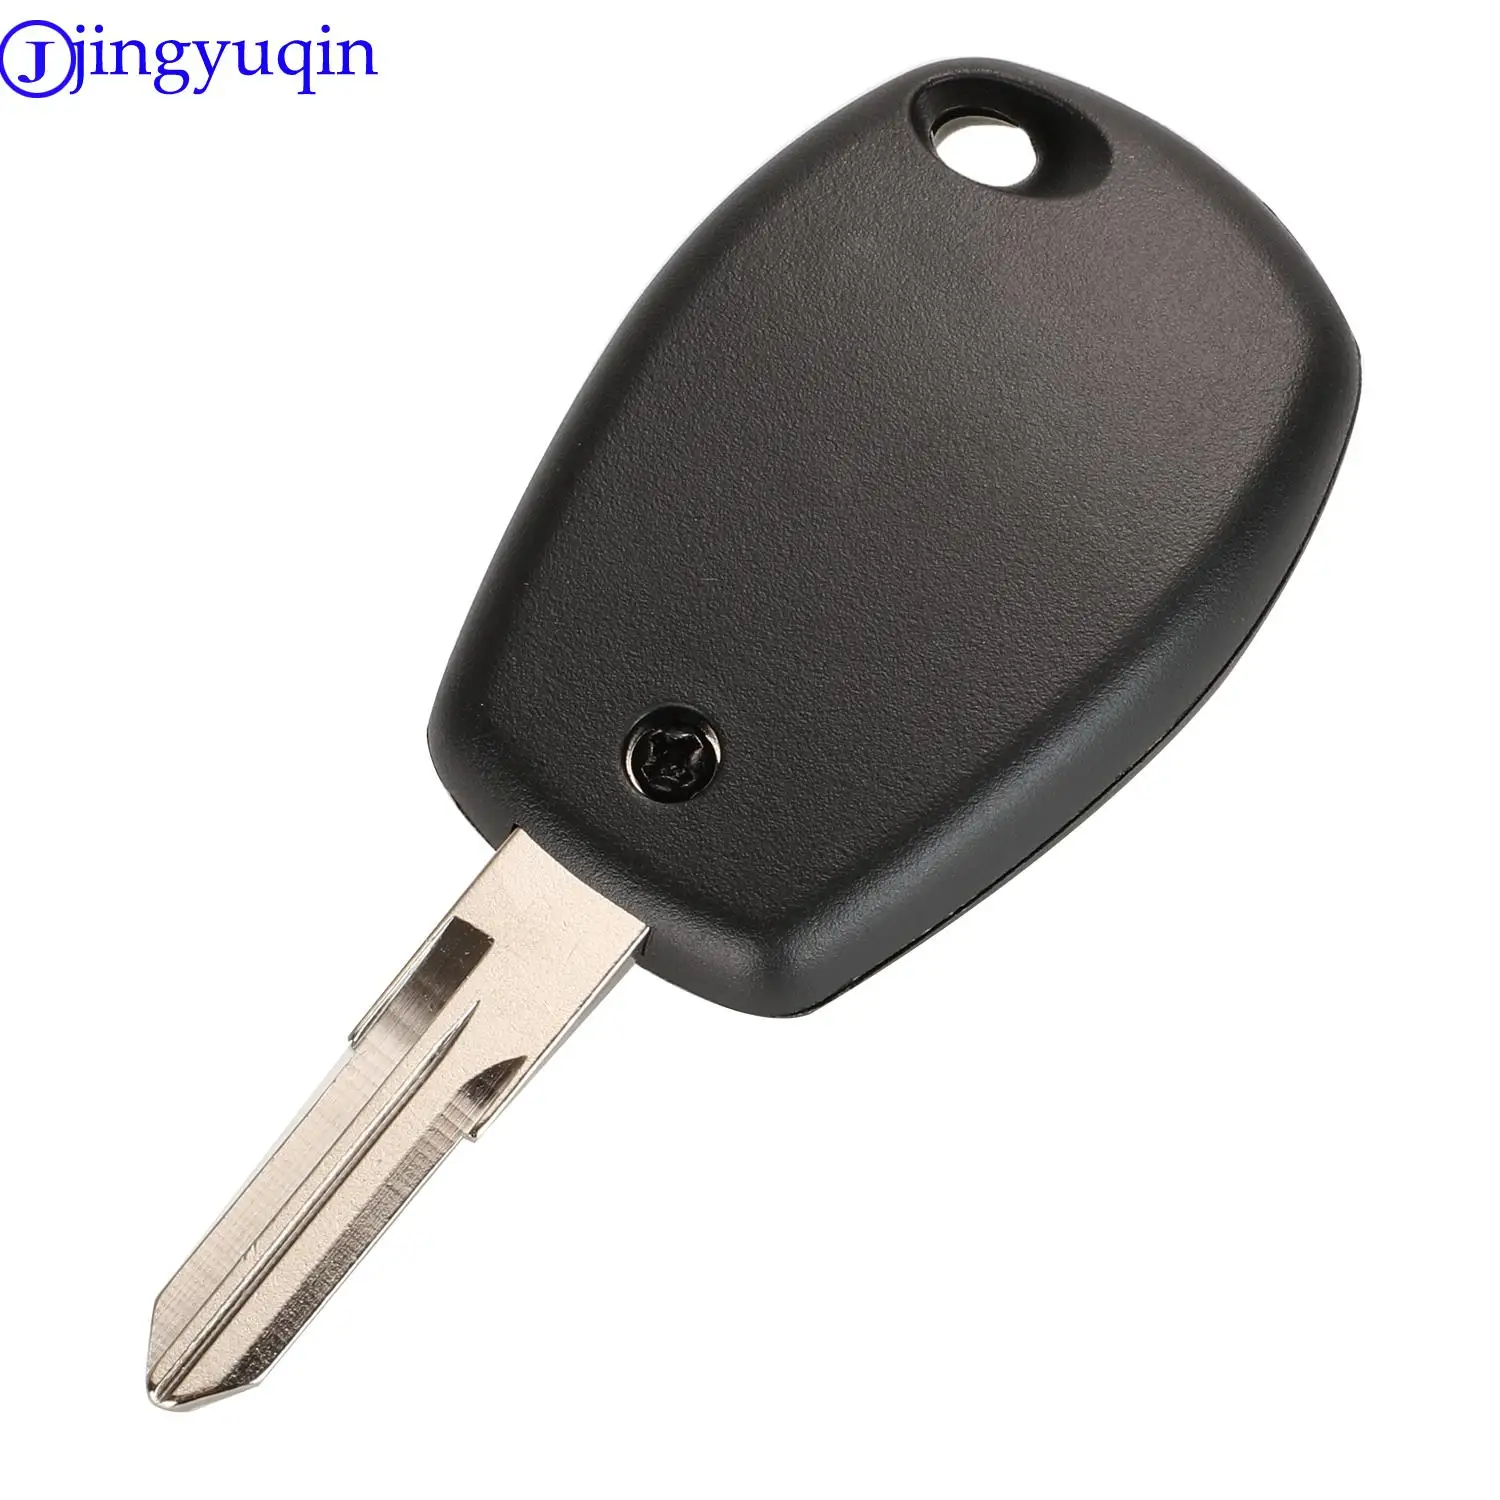 jingyuqin 2 Buttons Remote Key For Renault Duster Modus Clio 3 Twingo DACIA Logan Sandero Kangoo 433MHz PCF7947/7946/4A Chip images - 6